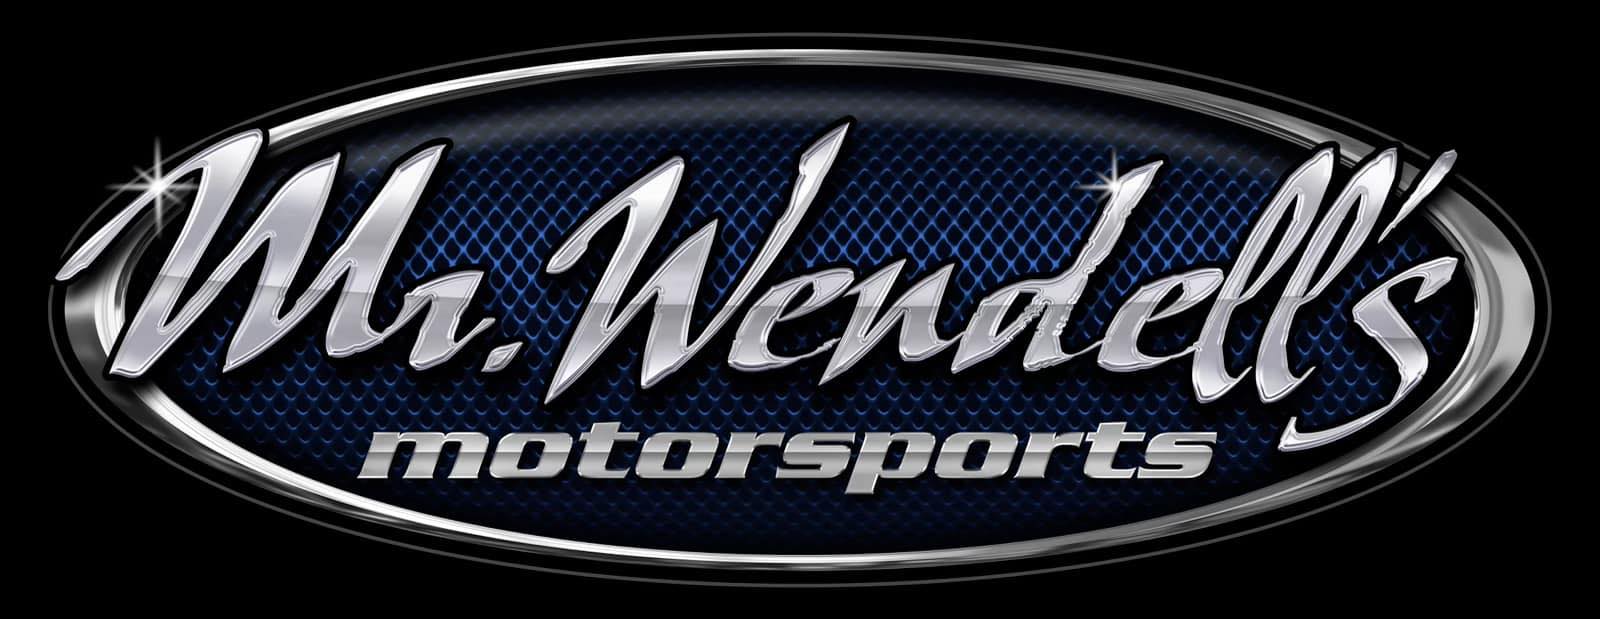 Mr Wendell's Motorsports